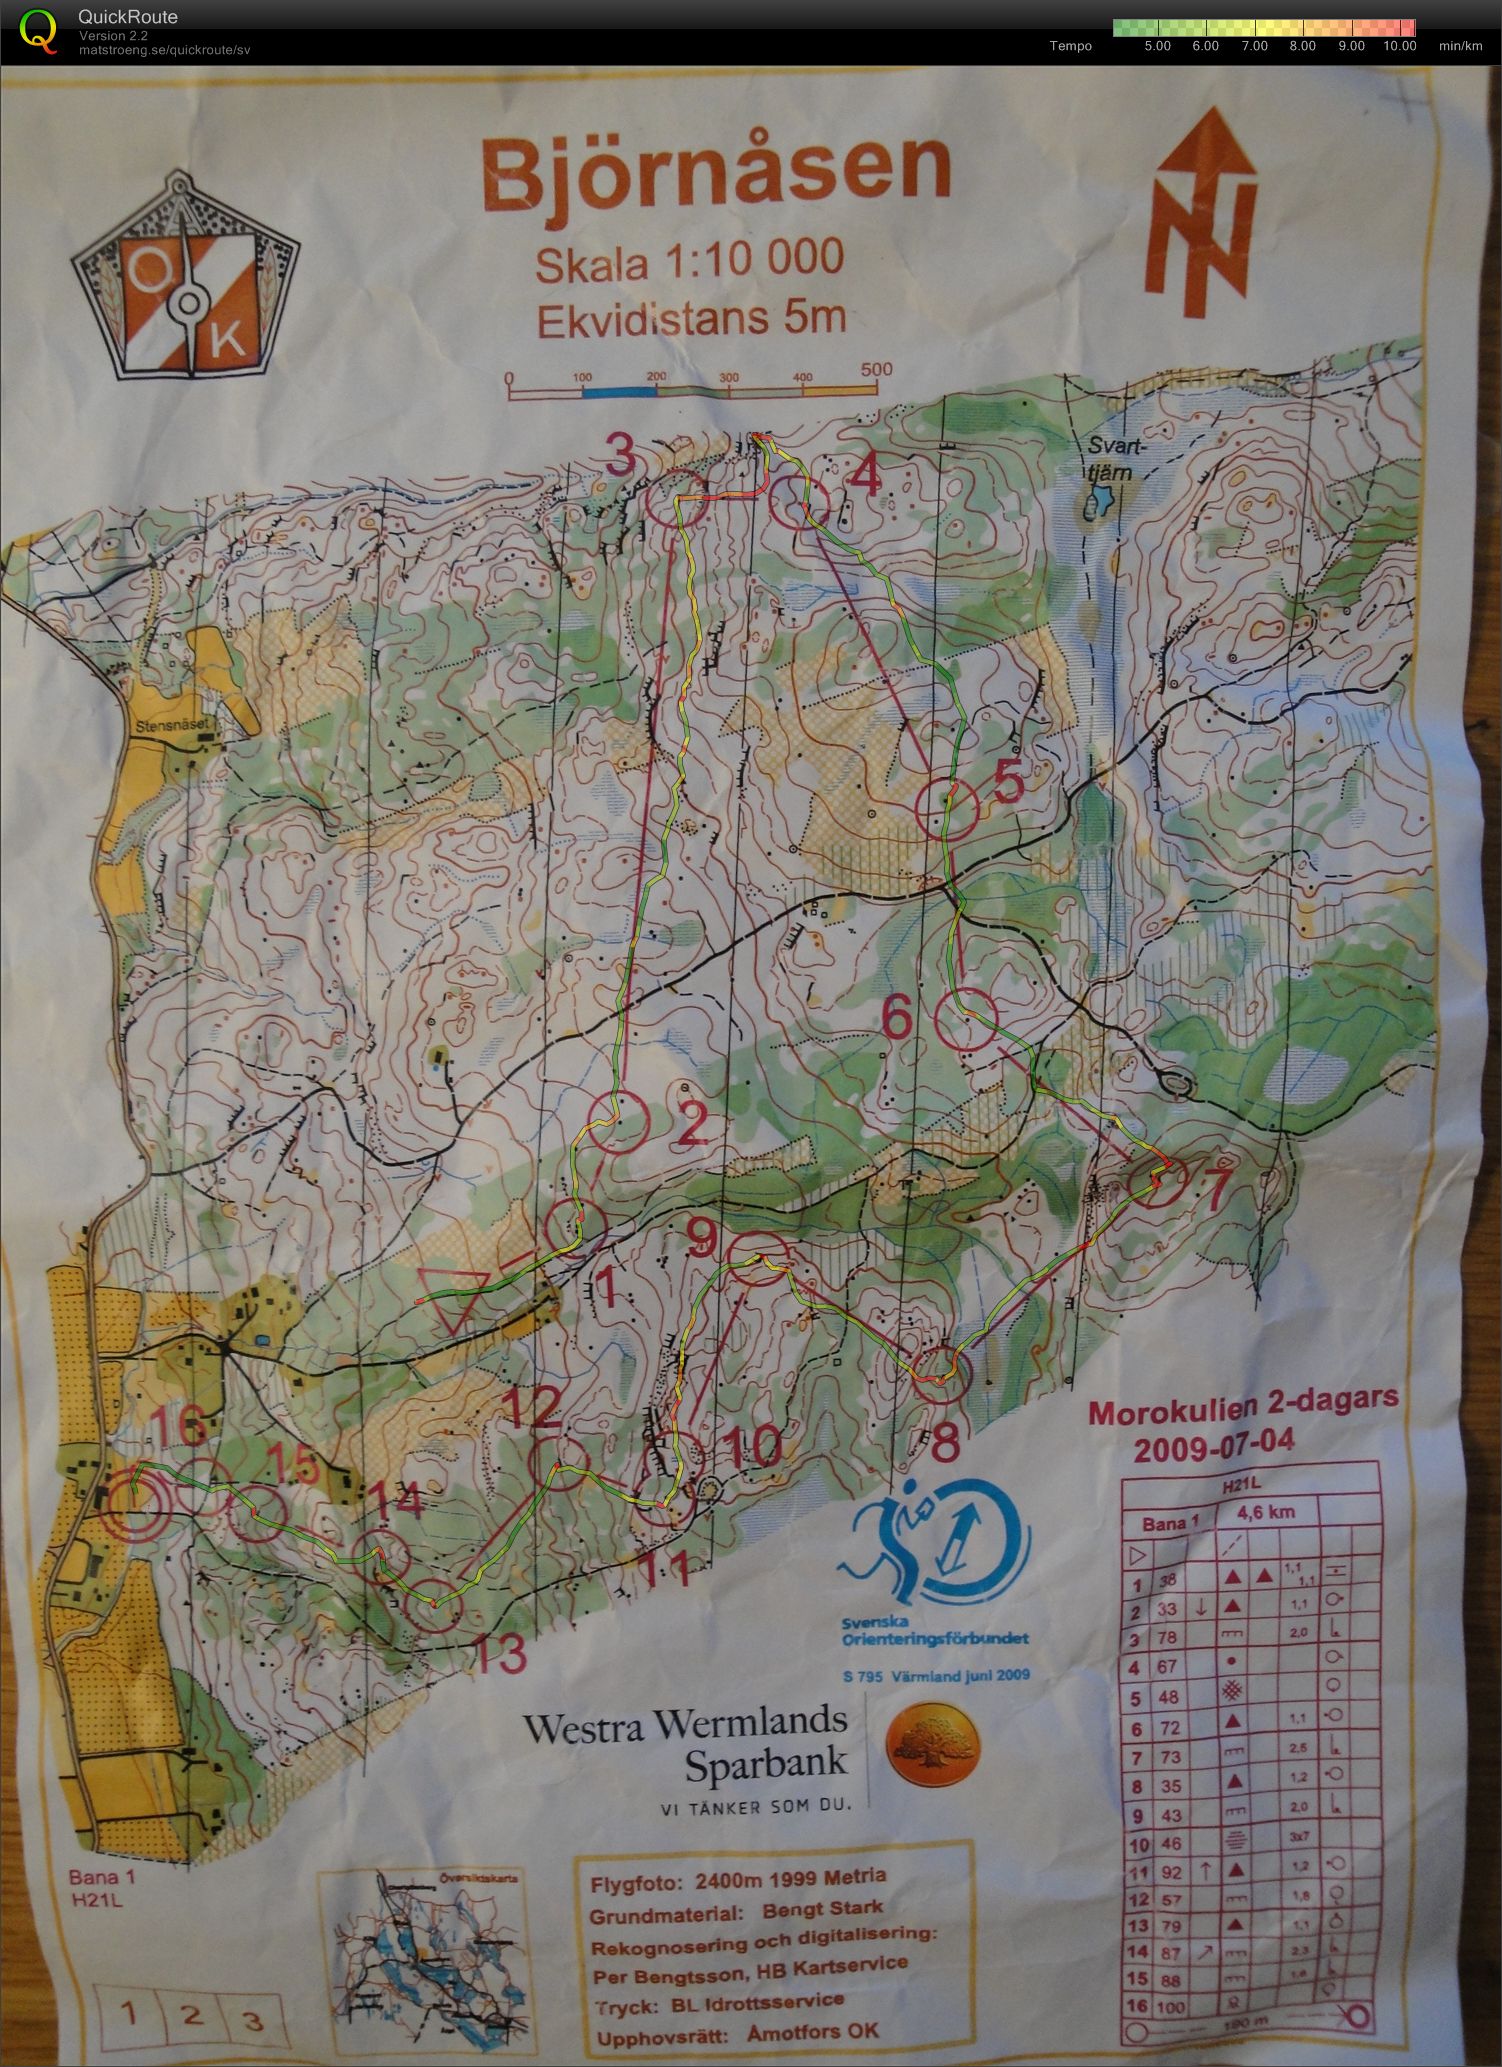 Morokuliens 2-dagars etapp 1 (2009-07-04)